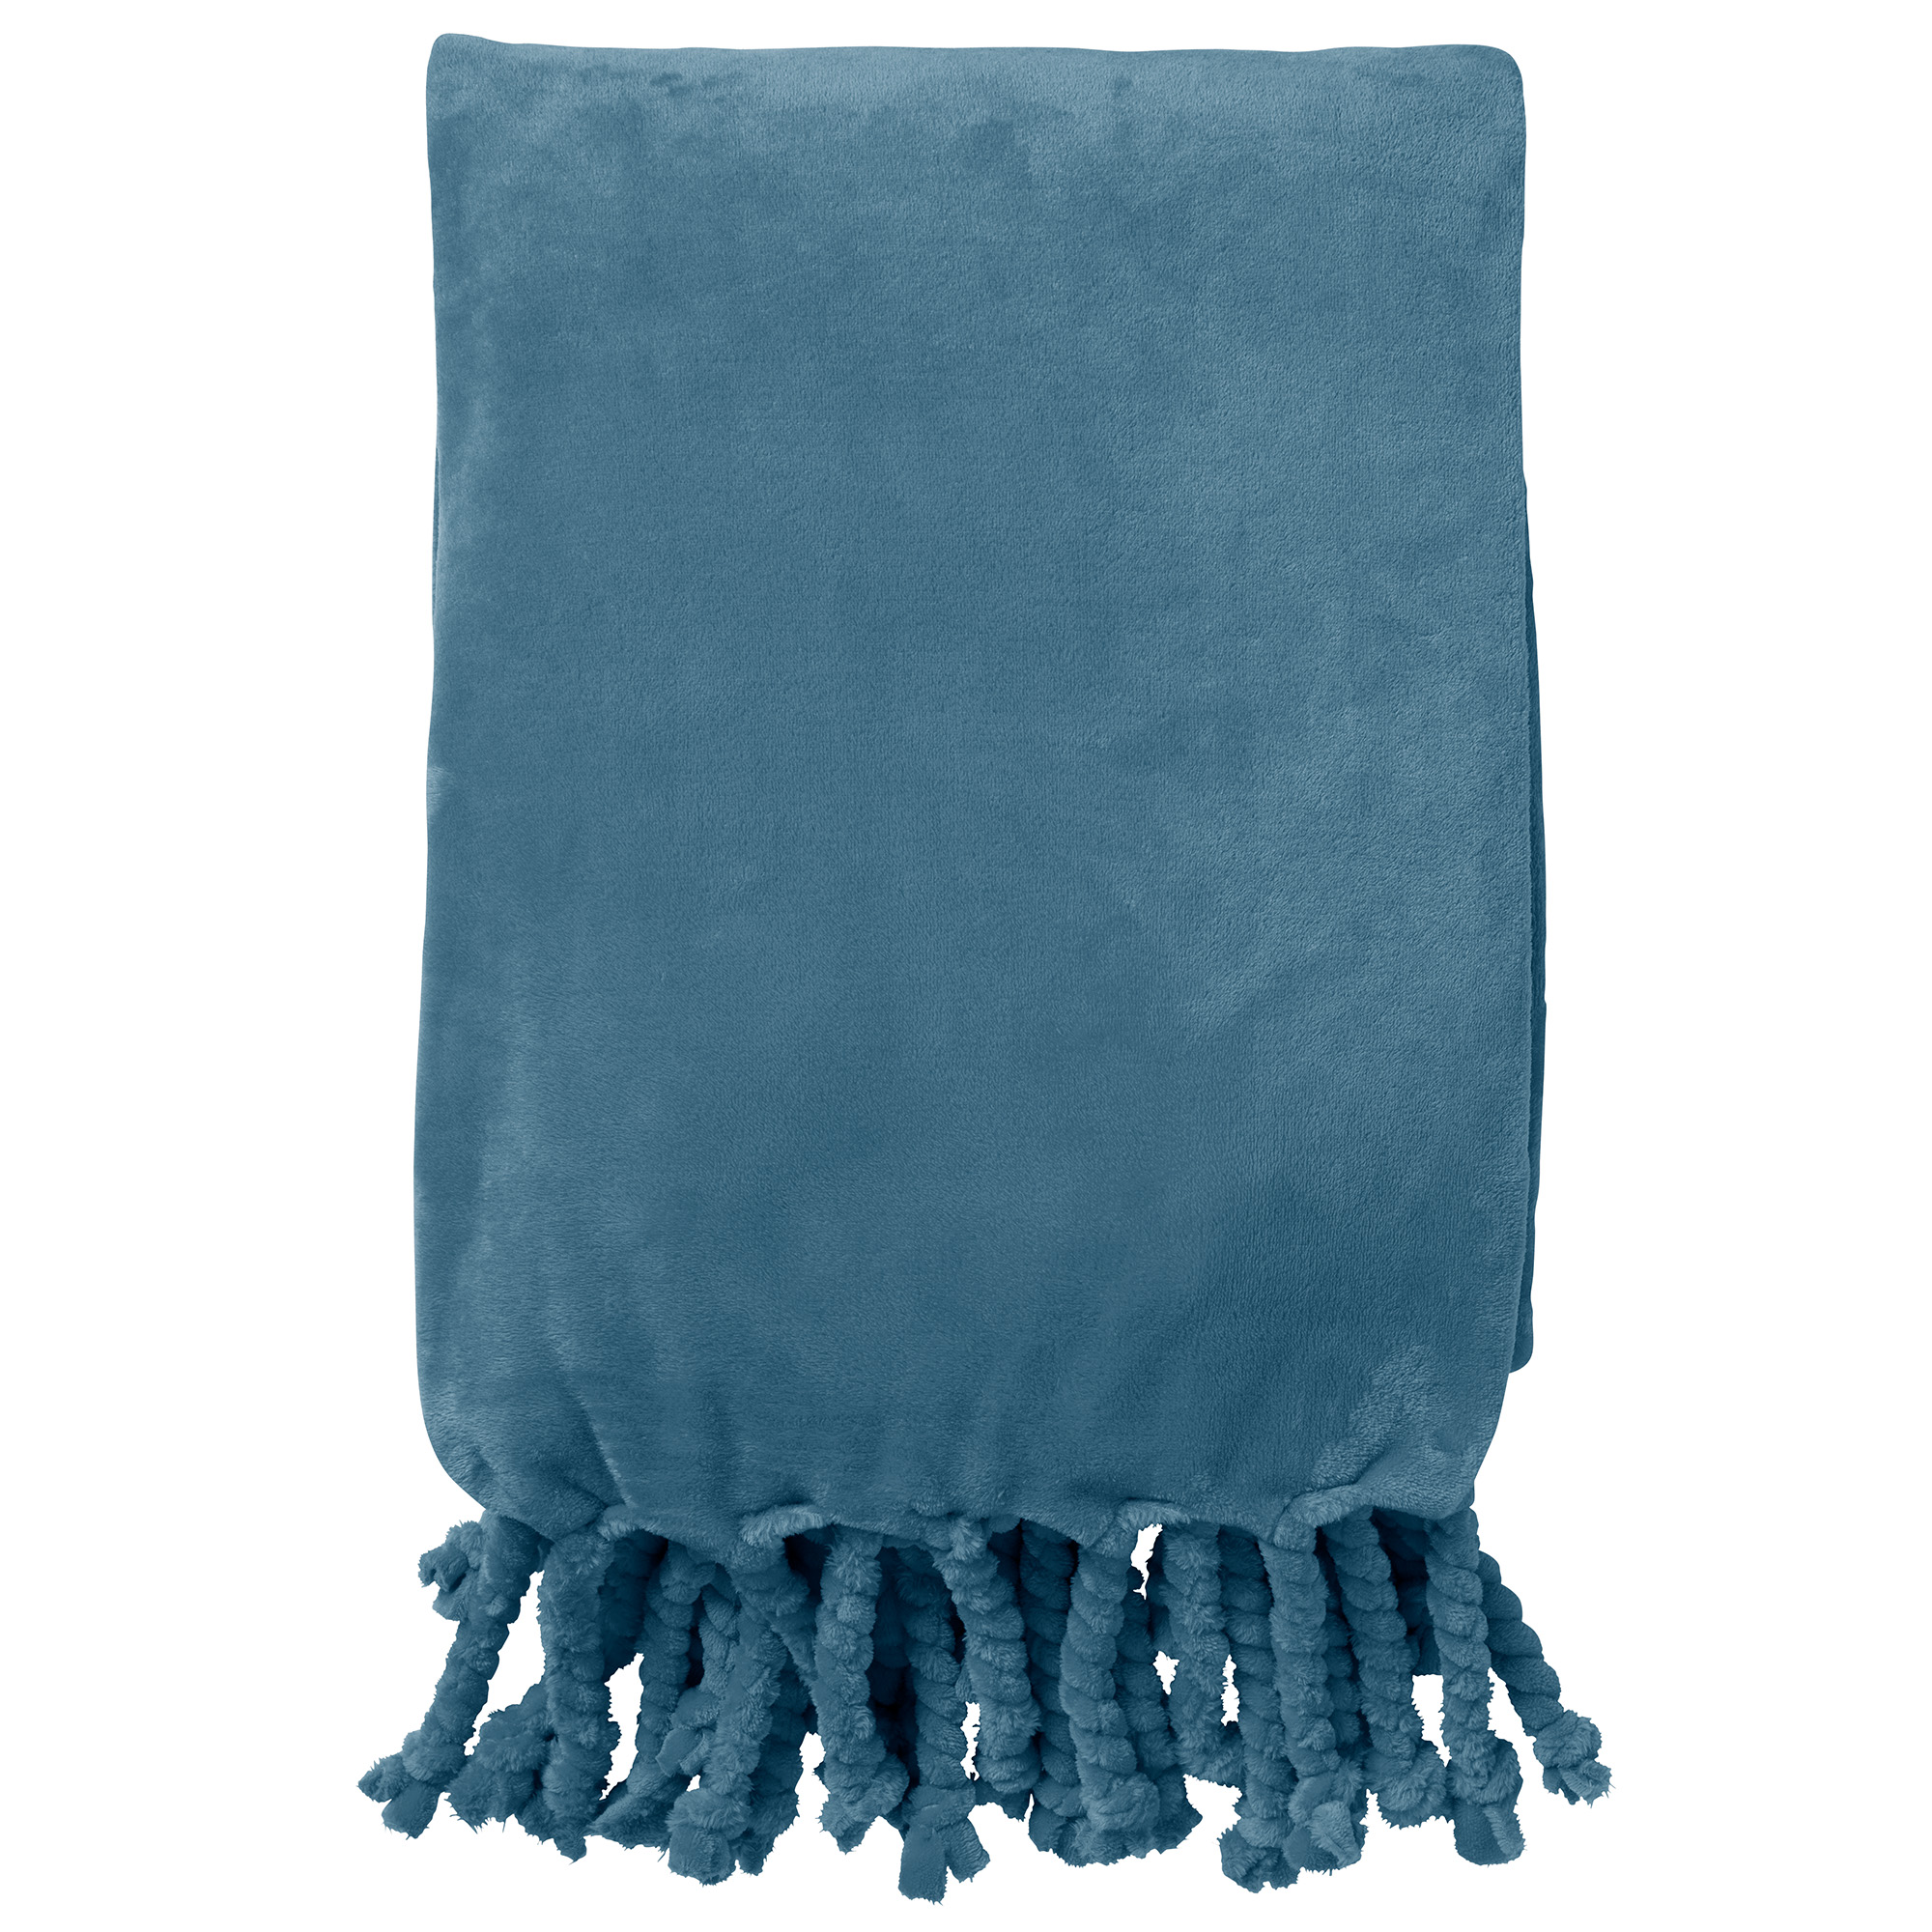 FLORIJN - Plaid fleece 150x200 cm - Provincial Blue - blauw - superzacht - met franjes